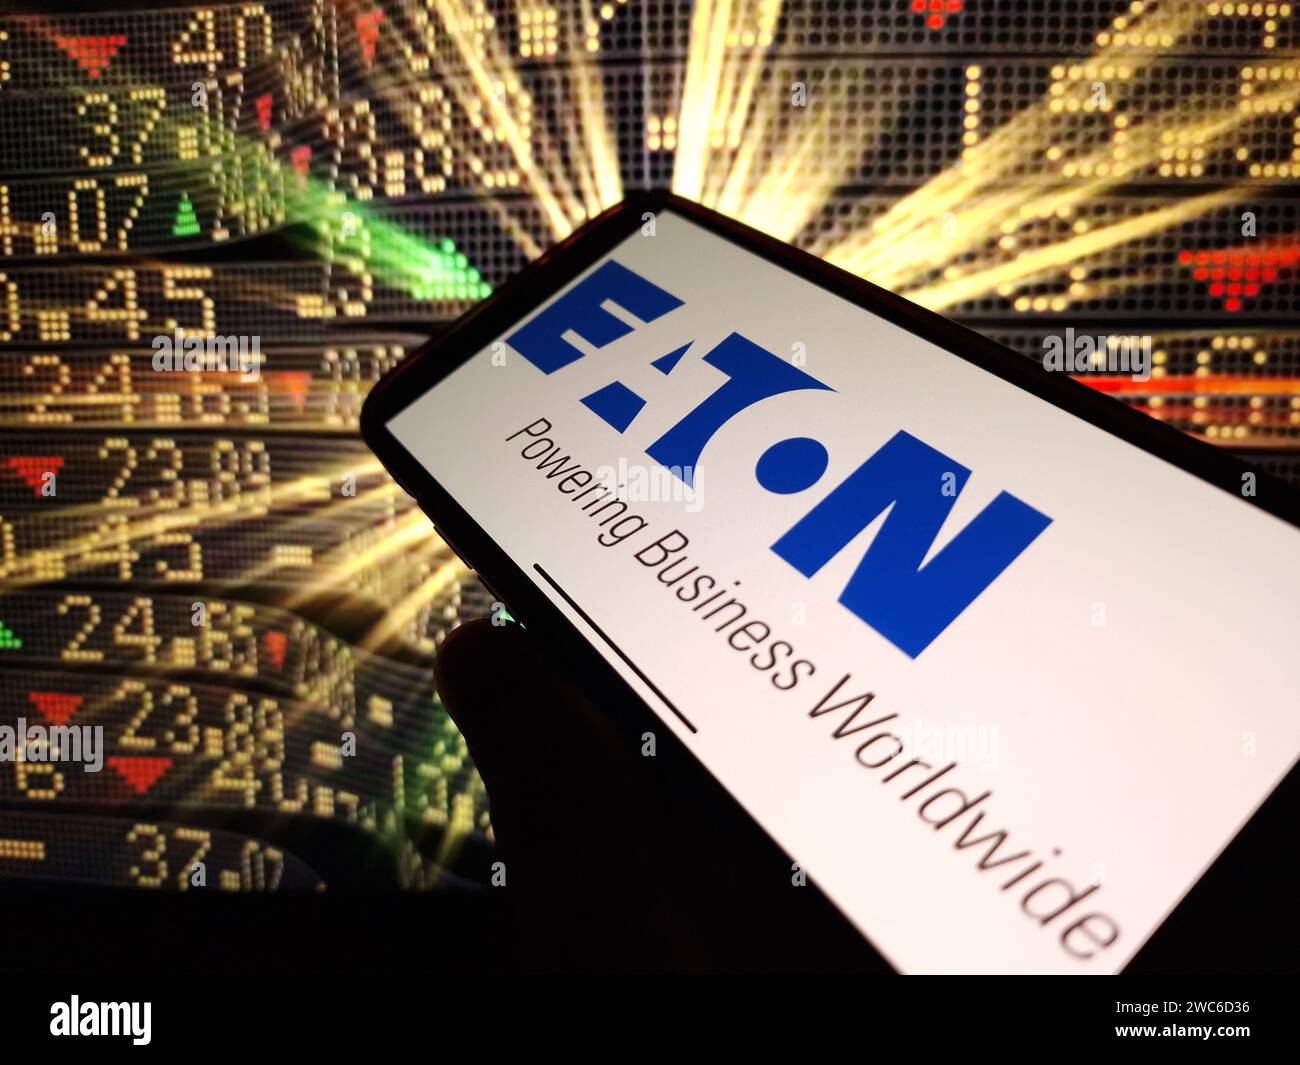 Konskie, Poland - January 13, 2024: Eaton Corporation plc company logo displayed on mobile phone screen Stock Photo